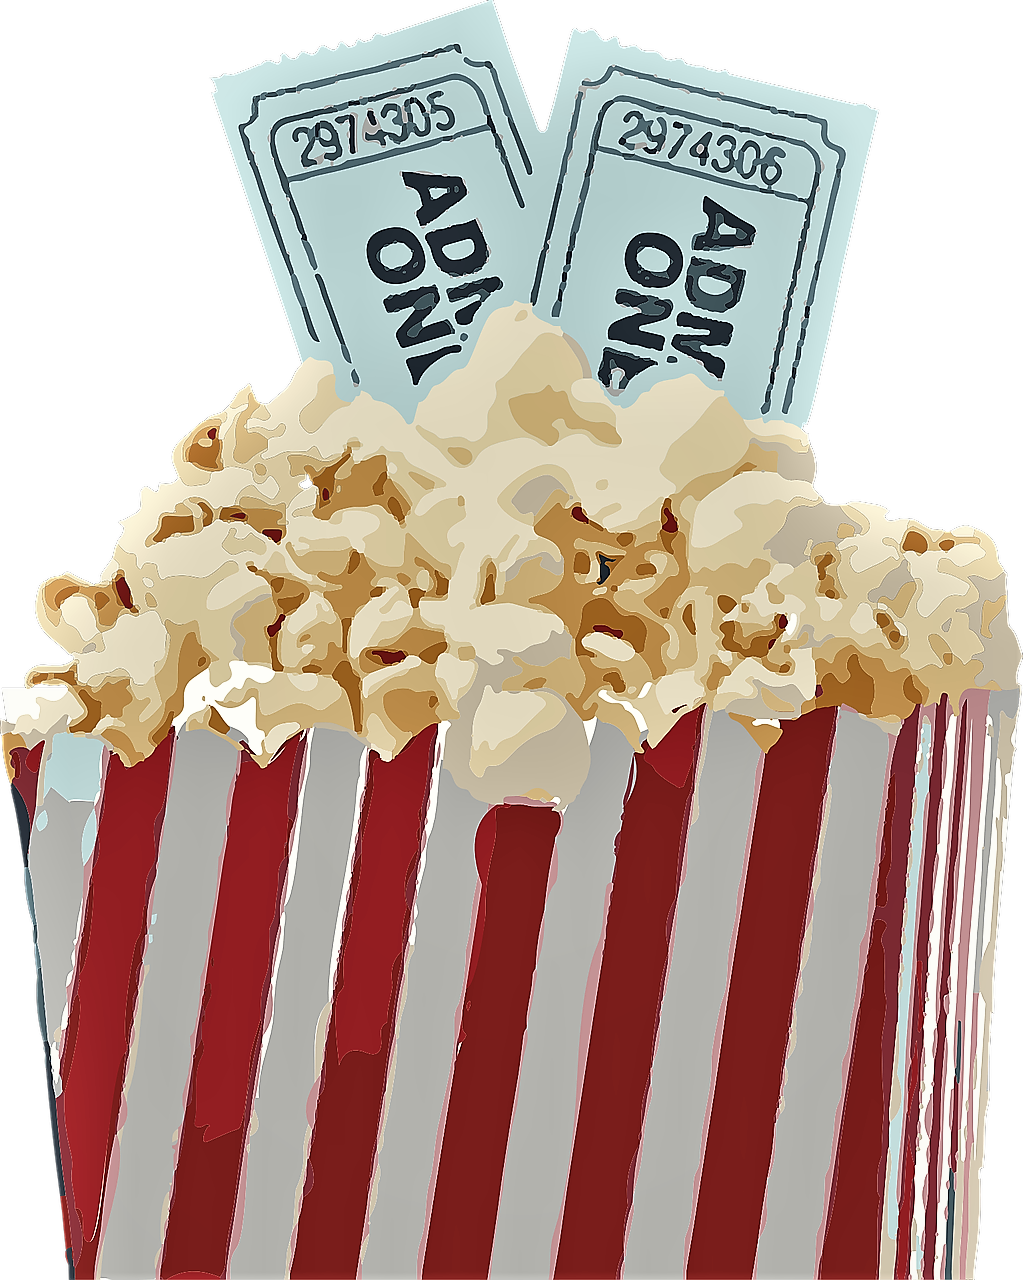 Cinema tickets in a Popcorn cardboard box with stripes